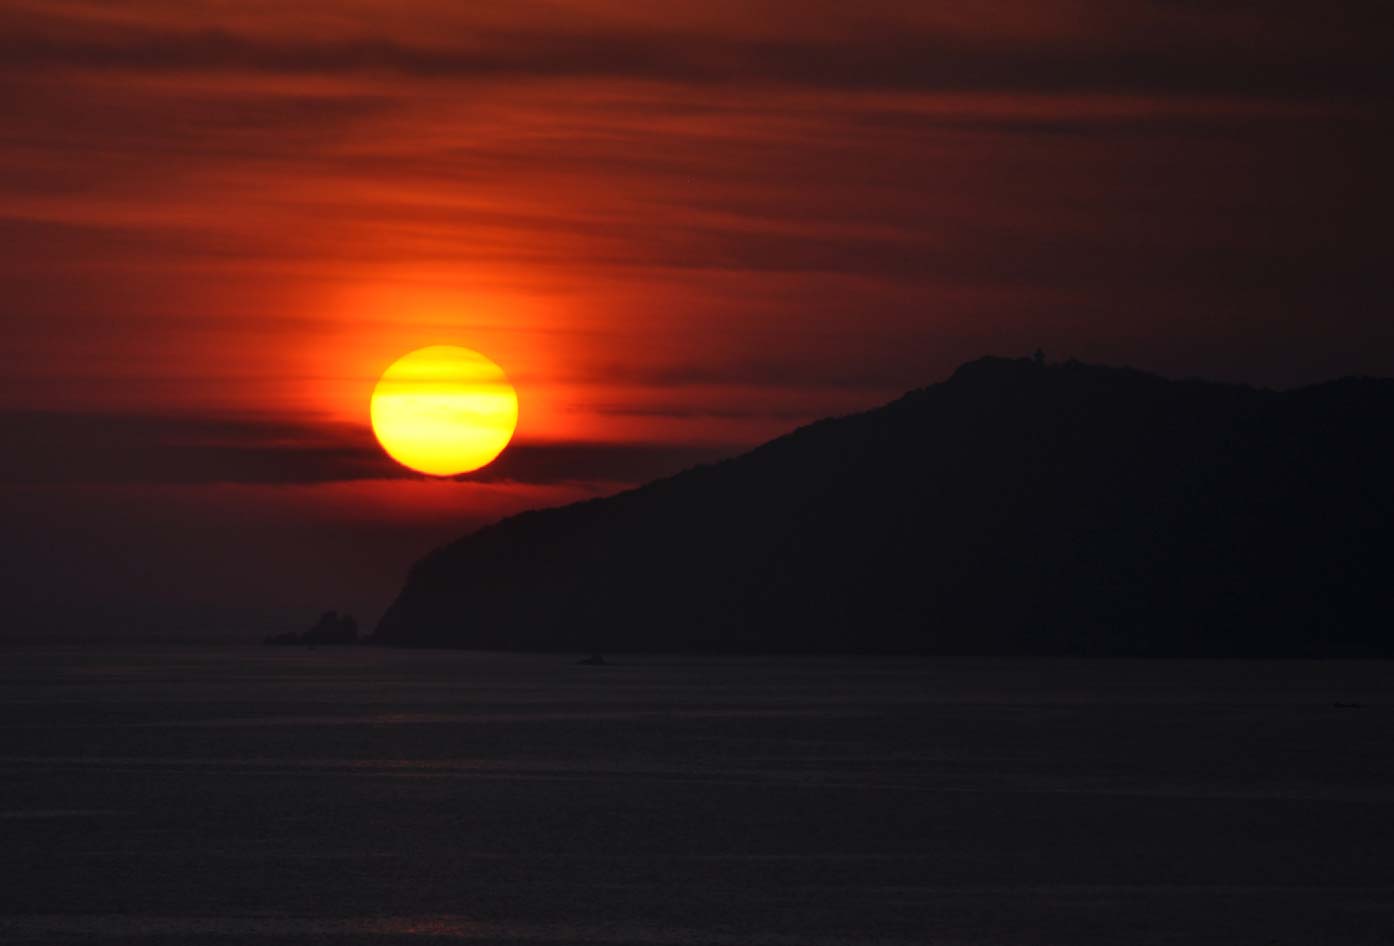 acapulco sunset